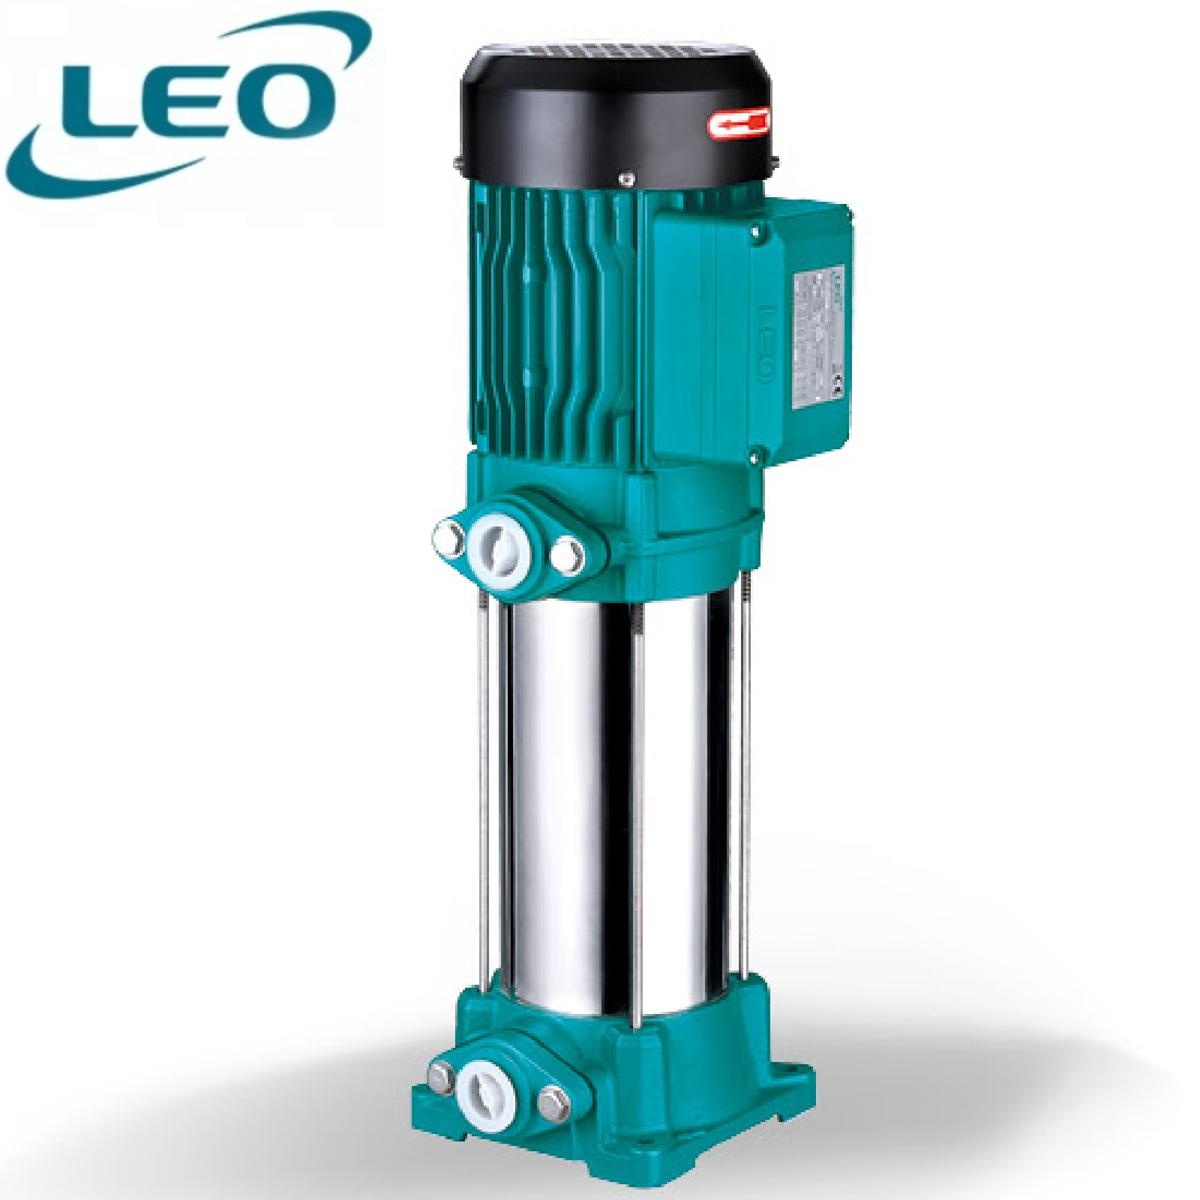 LEO - EVPM-2-4 - 750 W - 1 HP -  Vertical Multistage Booster  - HIGH PRESSURE Pump - SIZE 1" X 1" European STANDARD